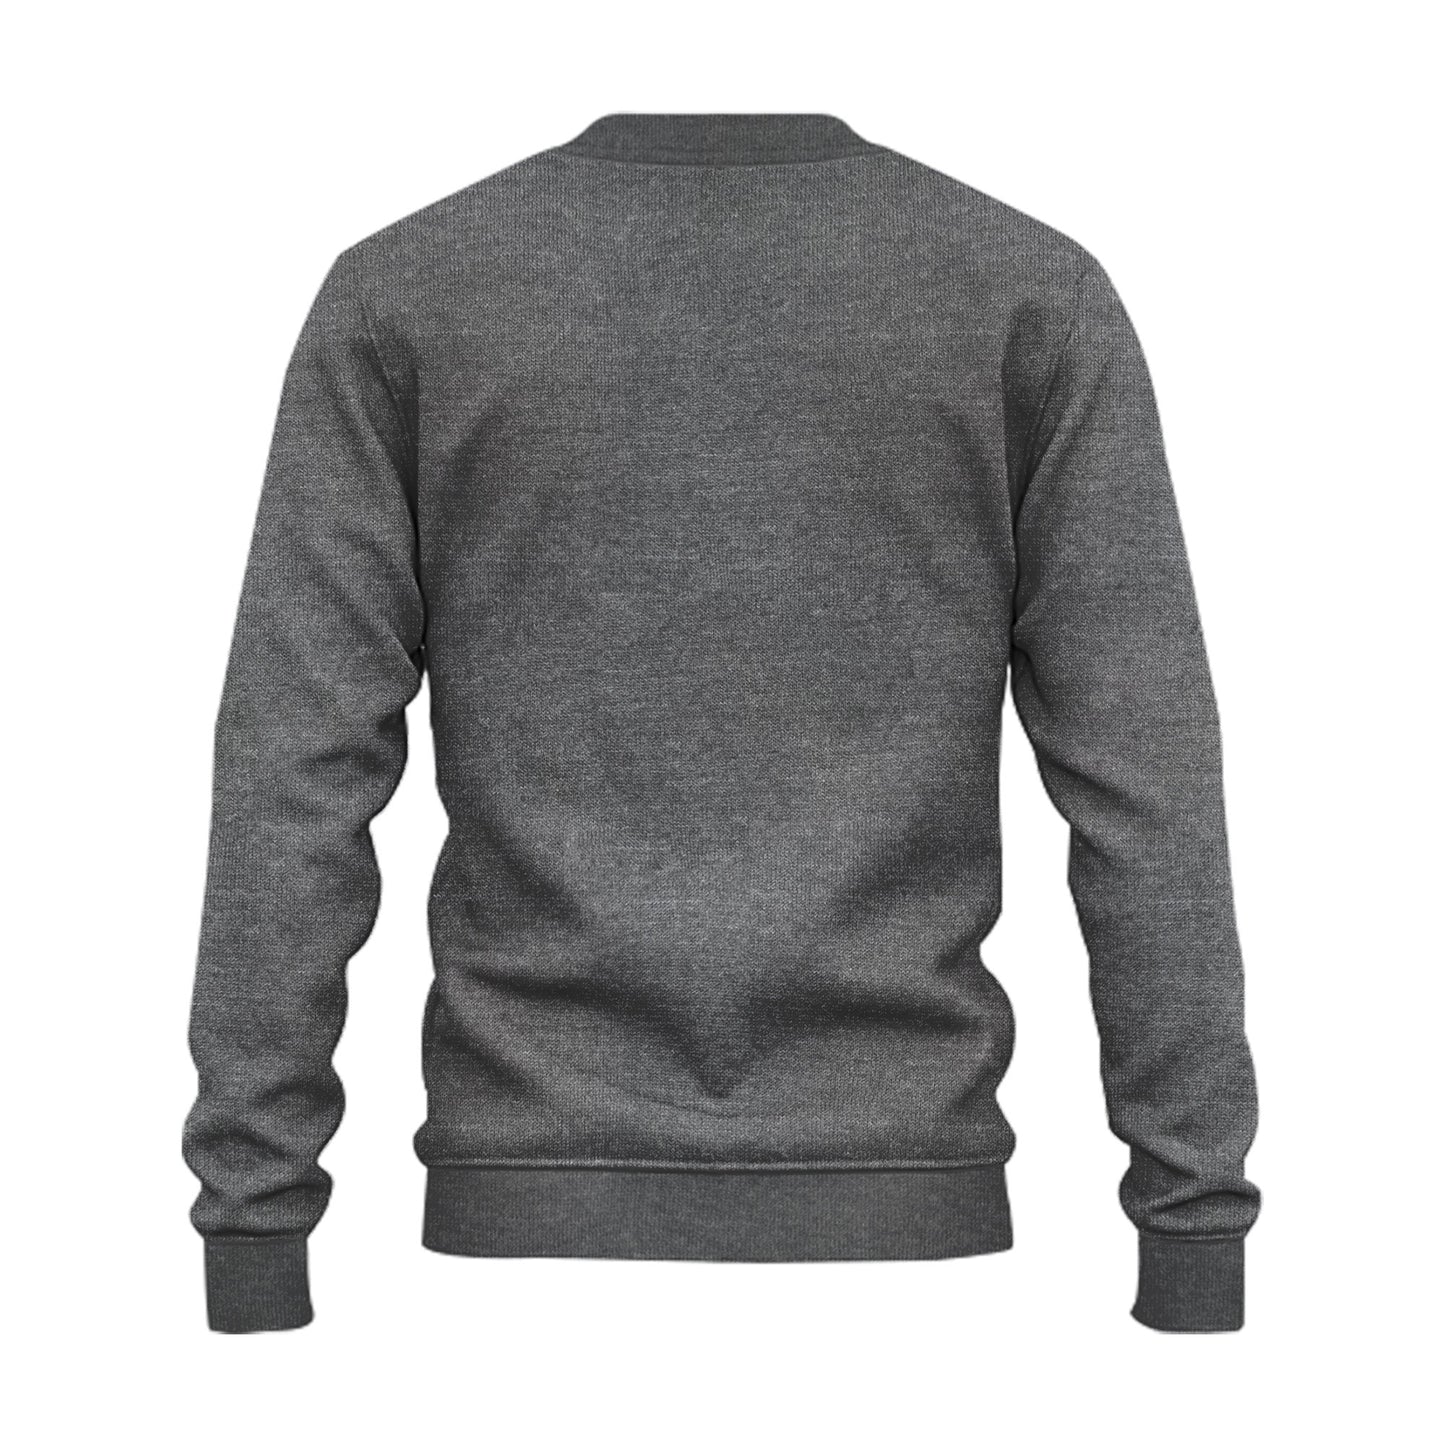 Men's Charcoal Grey Crewneck Fleece Sweatshirt